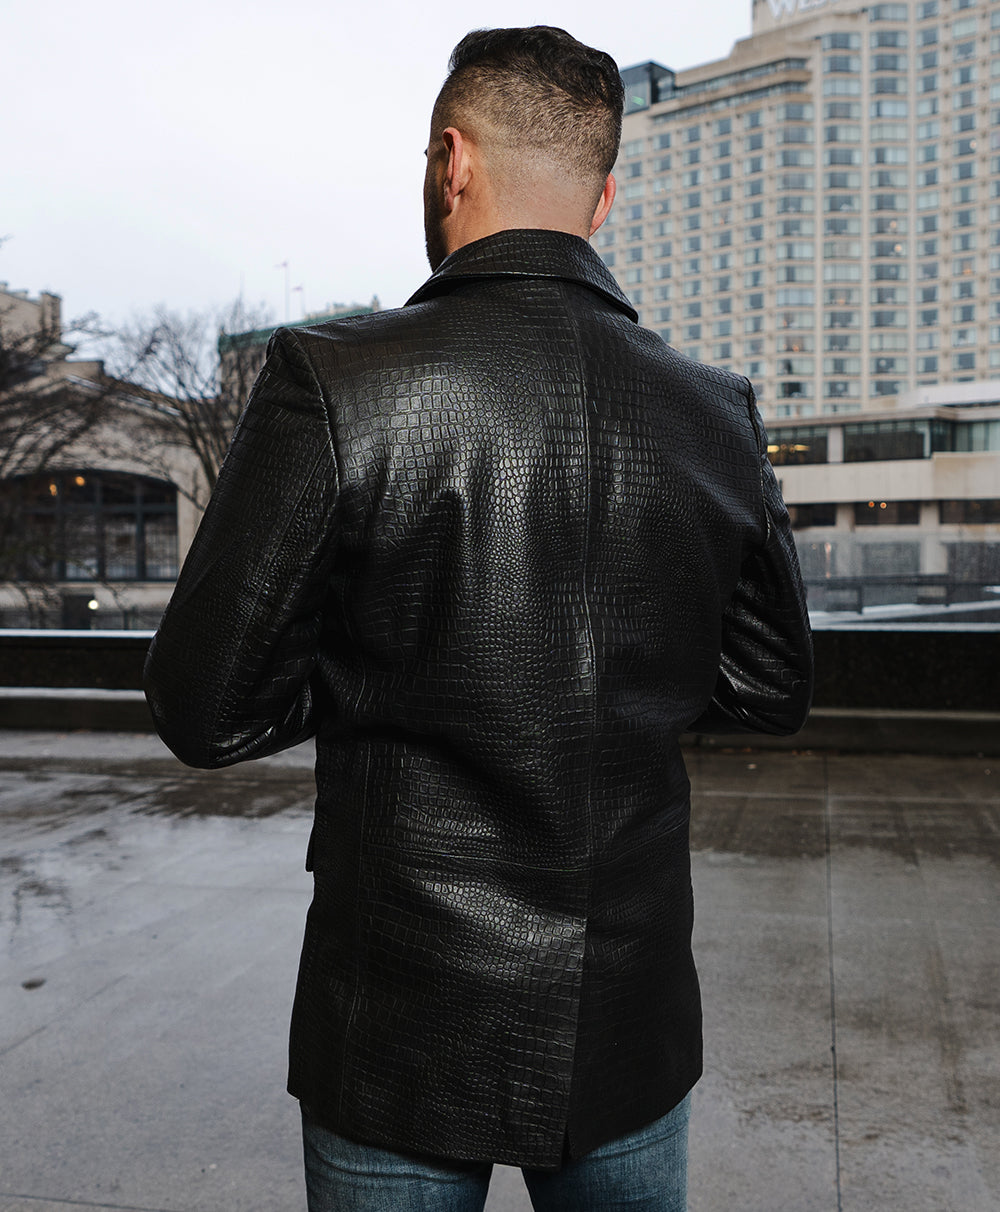 Croc print black leather blazer